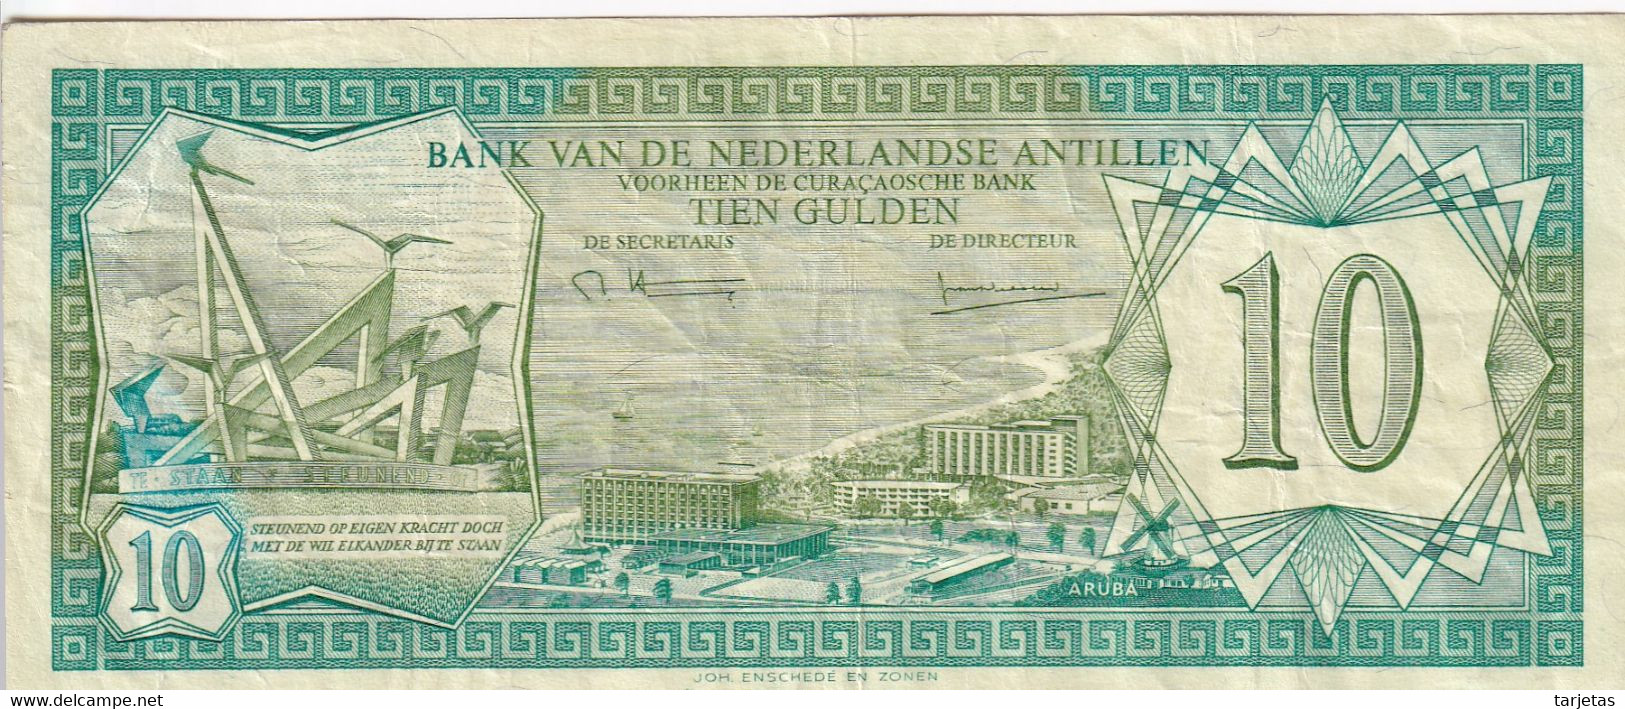 BILLETE DE CURAÇAO DE 10 GULDEN DEL AÑO 1979  (BANK NOTE) - Antilles Néerlandaises (...-1986)